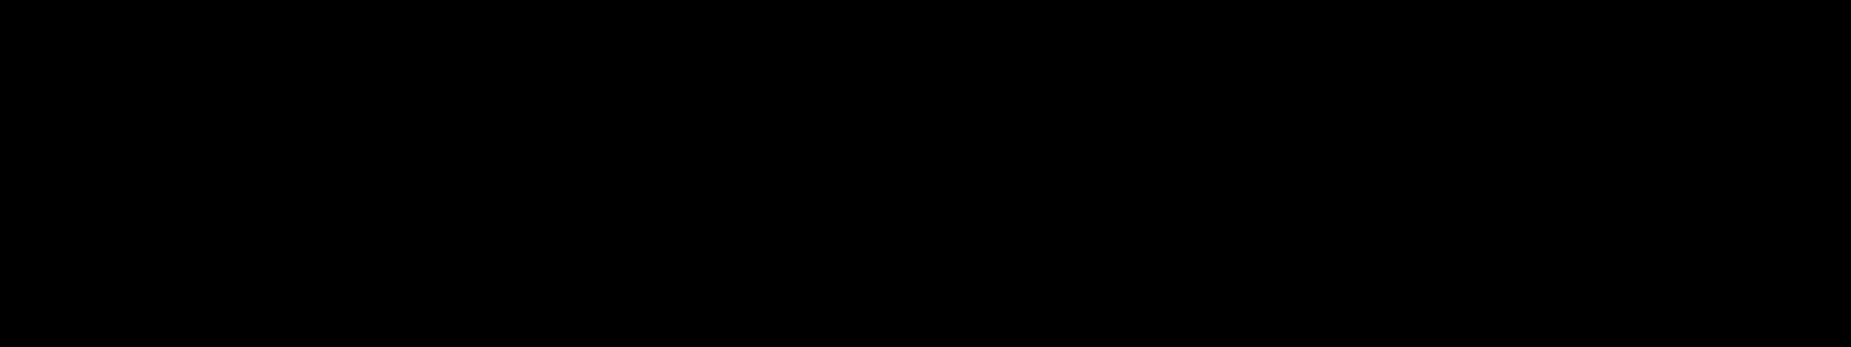 Black Discord Logo